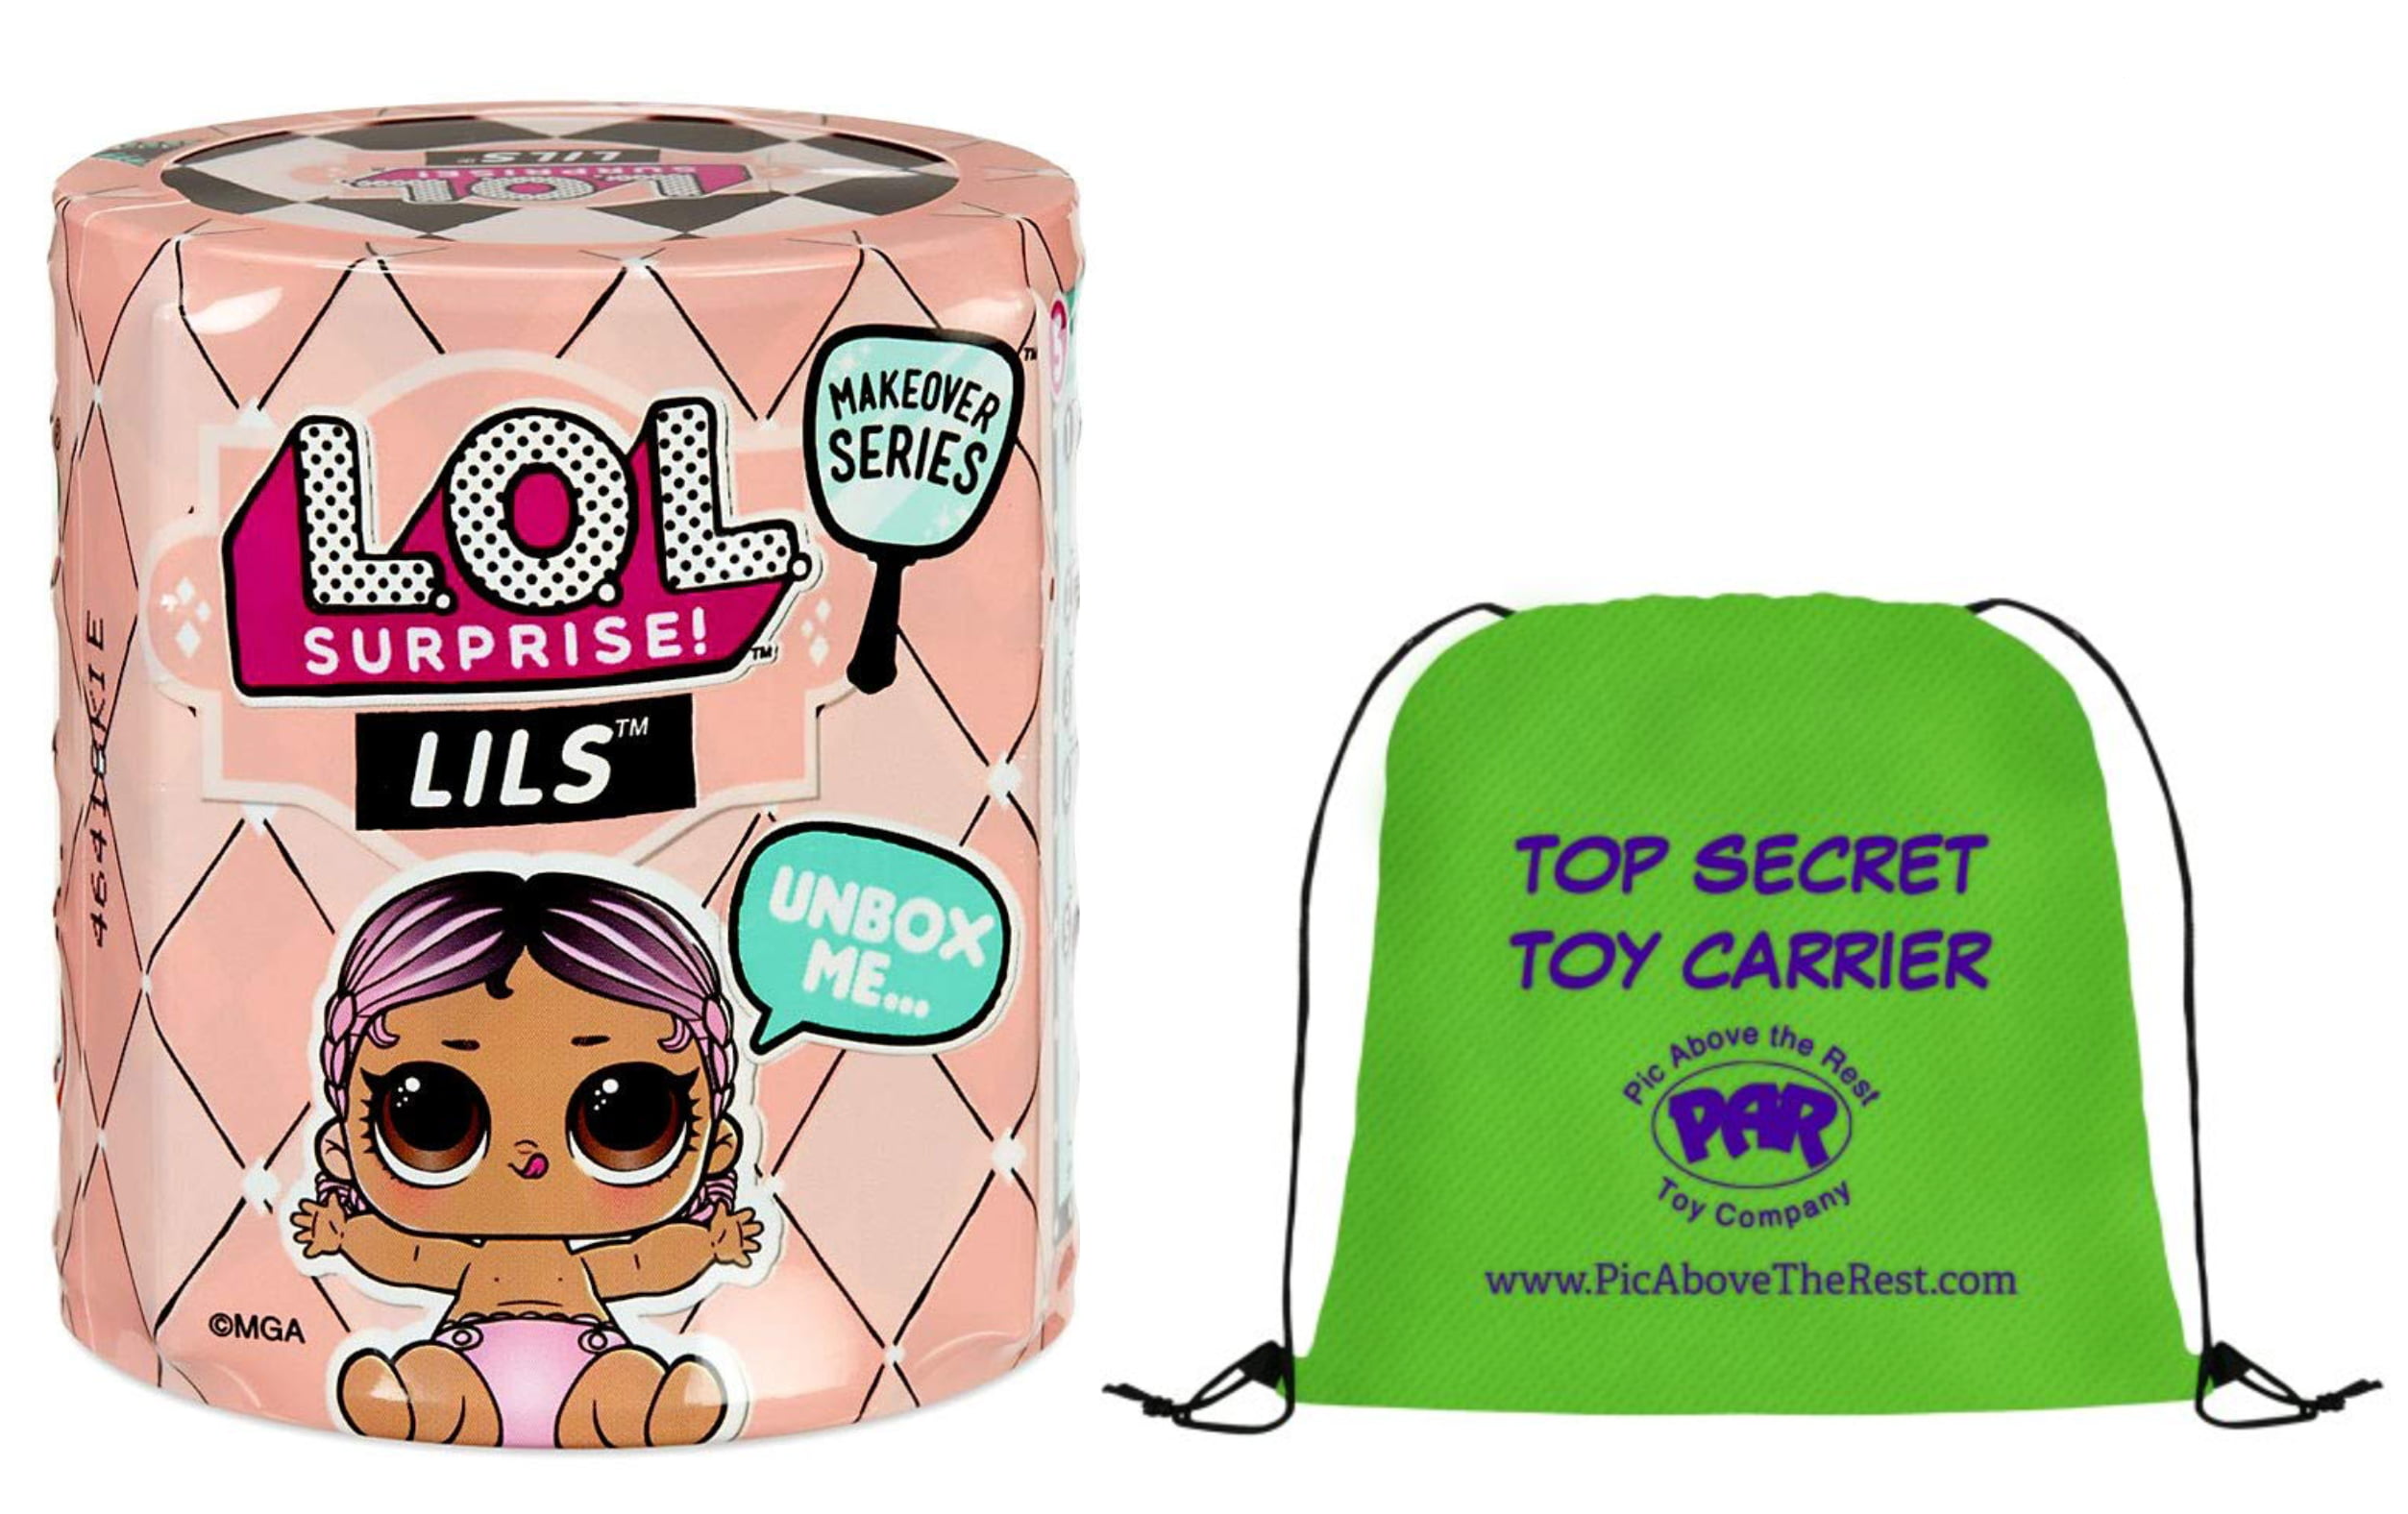 LOL Surprise Lils Collectable Dolls with Bonus Bag Toy Carrier